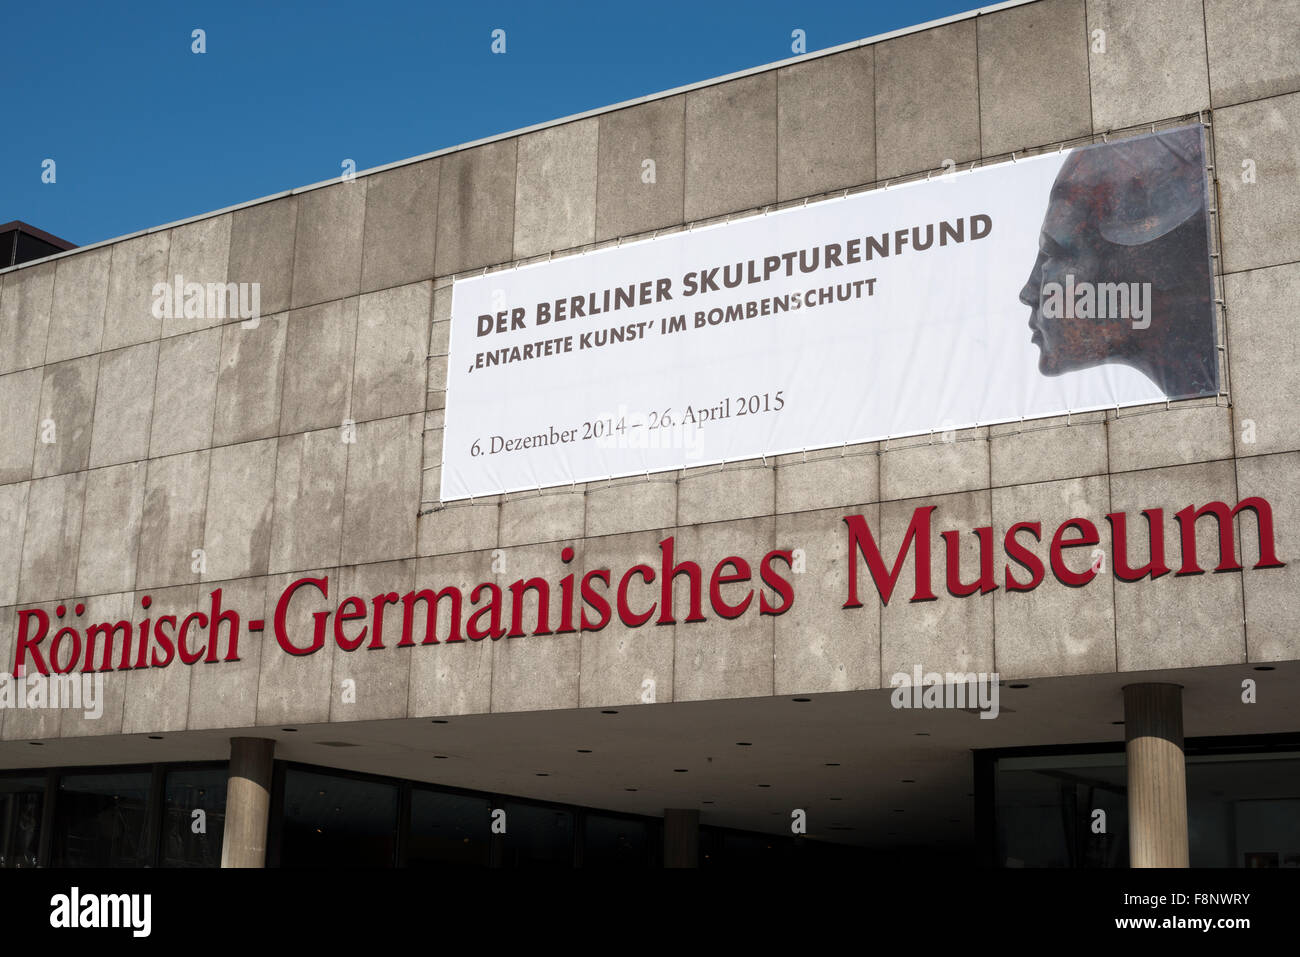 Der Berliner Skulpturenfund mostra, Komisch-Germanisches Museum di Colonia, Germania. Foto Stock